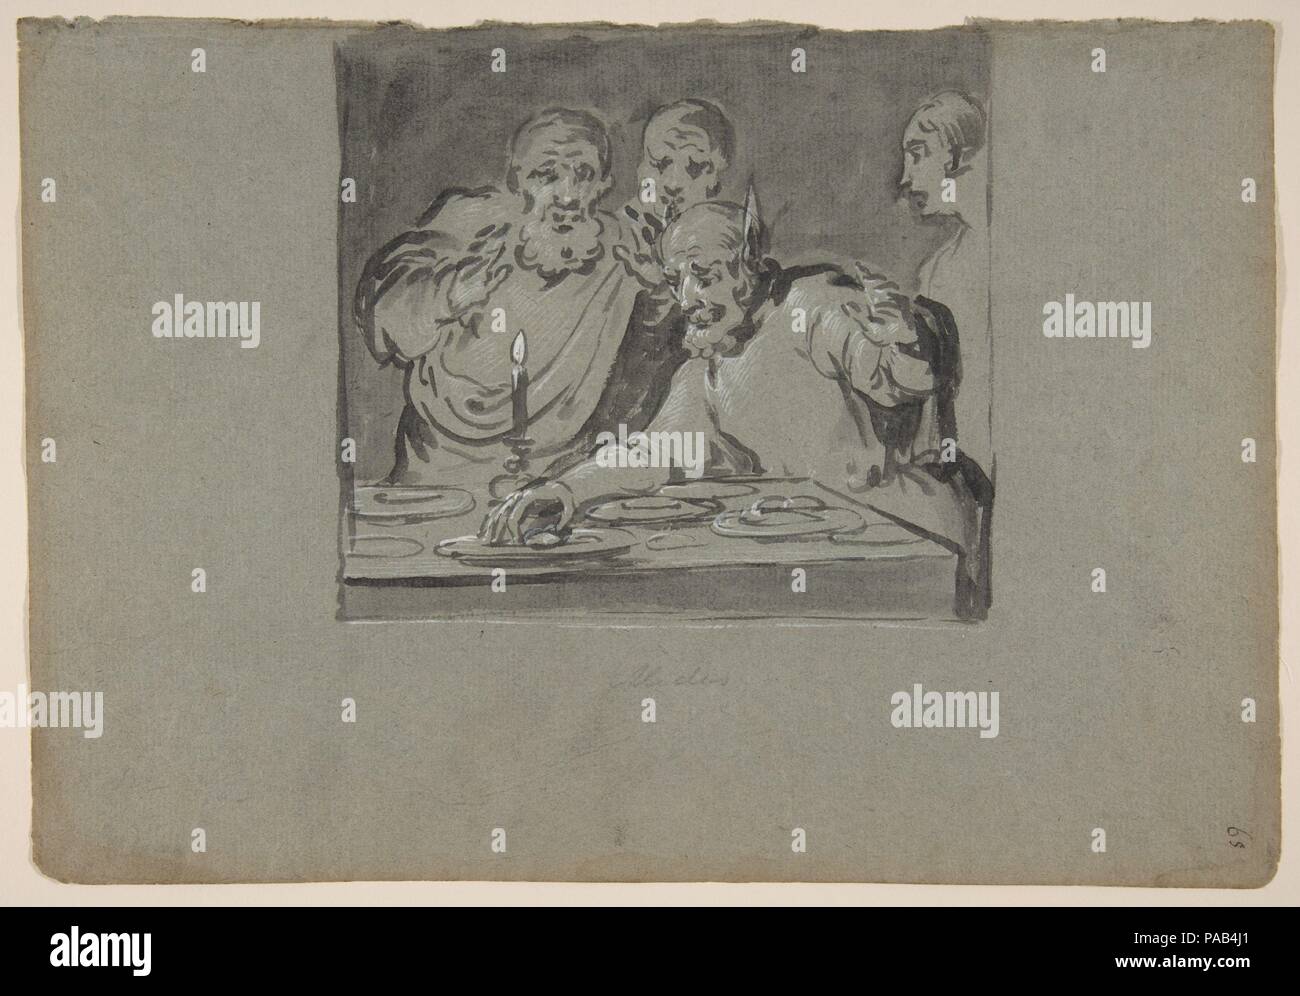 King Midas. Artist: Leonaert Bramer (Dutch, Delft 1596-1674 Delft). Dimensions: sheet: 8 1/4 x 11 13/16 in. (21 x 30 cm). Date: 1611-74. Museum: Metropolitan Museum of Art, New York, USA. Stock Photo